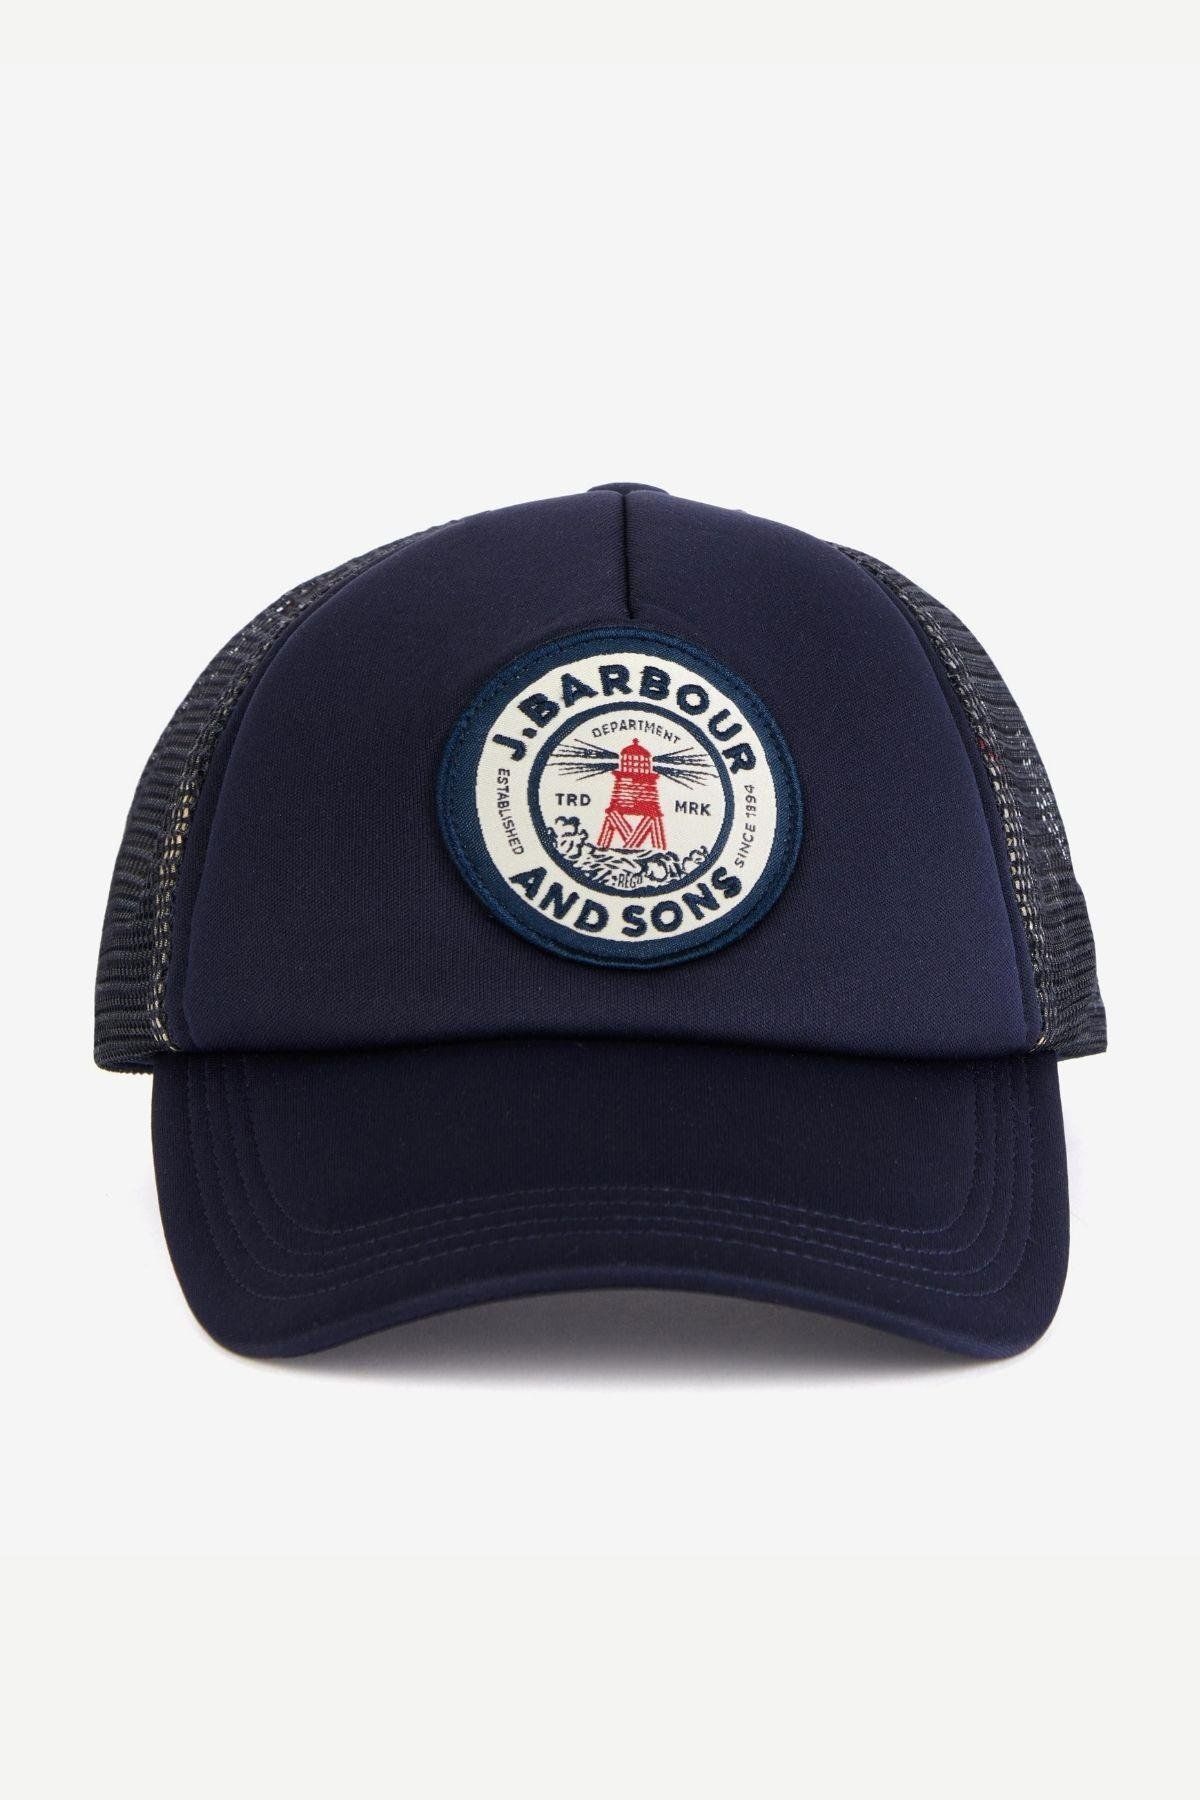 Barbour Fulton Trucker Hat NY71 Navy